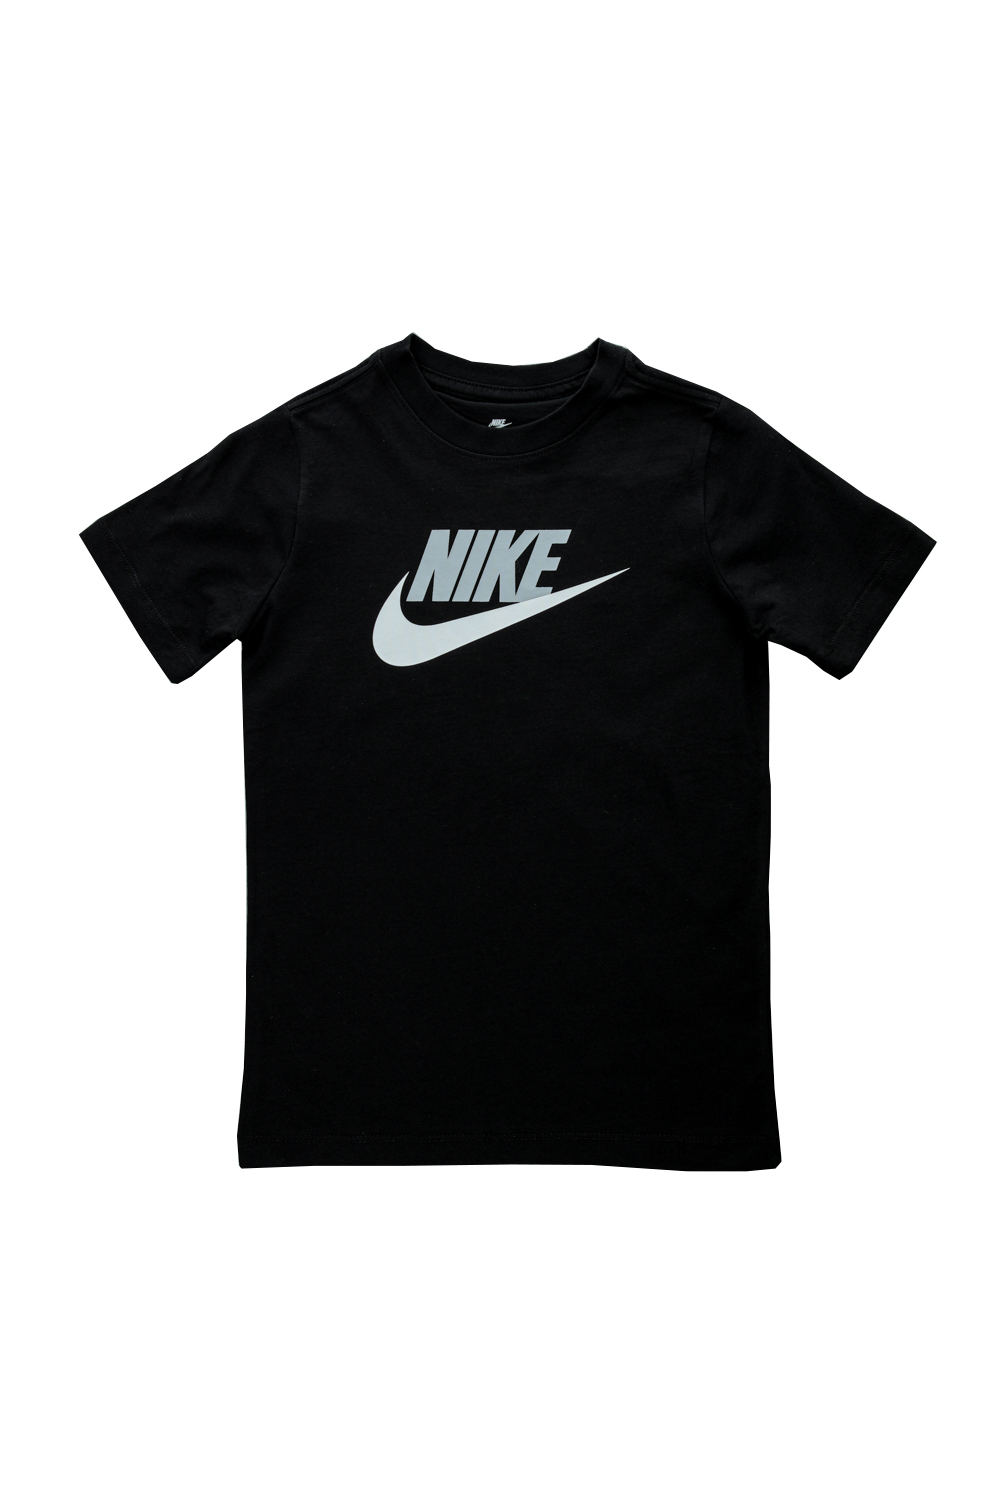 NIKE – Παιδικό t-shirt ΝΙΚΕ NSW FUTURA ICON μαύρο 1691842.1-71G3